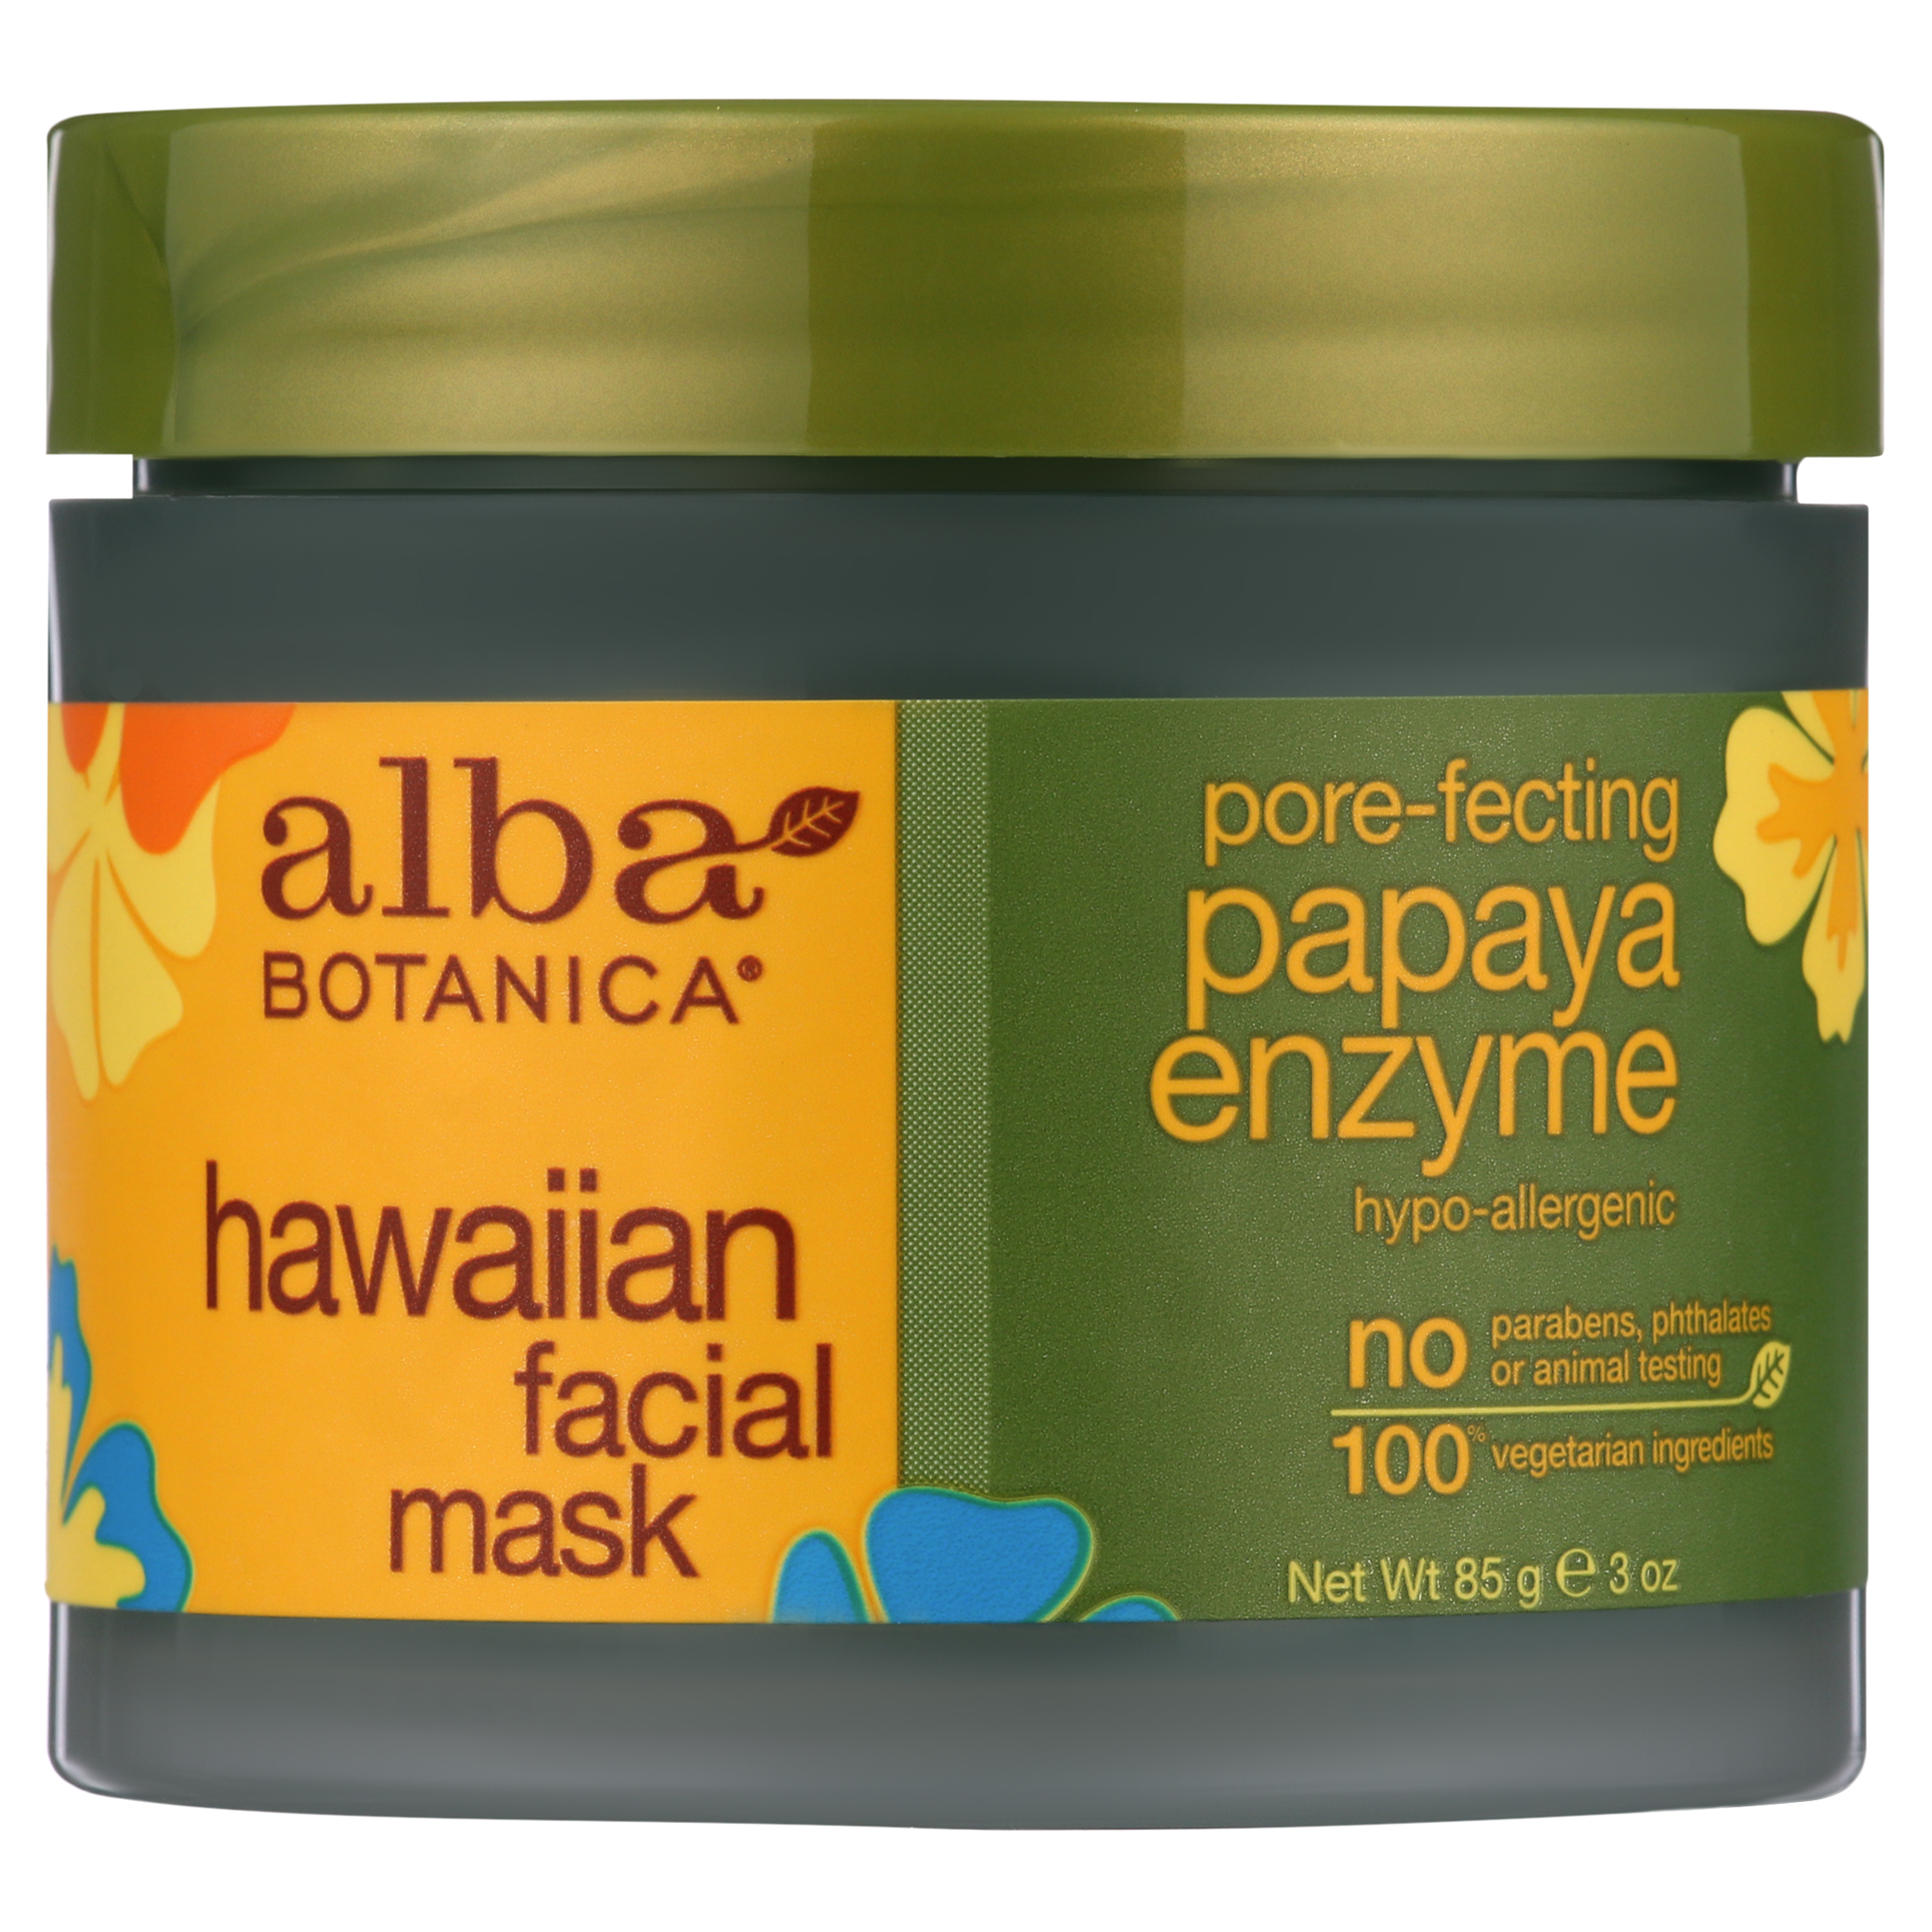 Alba Botanica Pore-Fecting Papaya Enzyme Hawaiian Facial Mask, 3 oz. - image 4 of 7